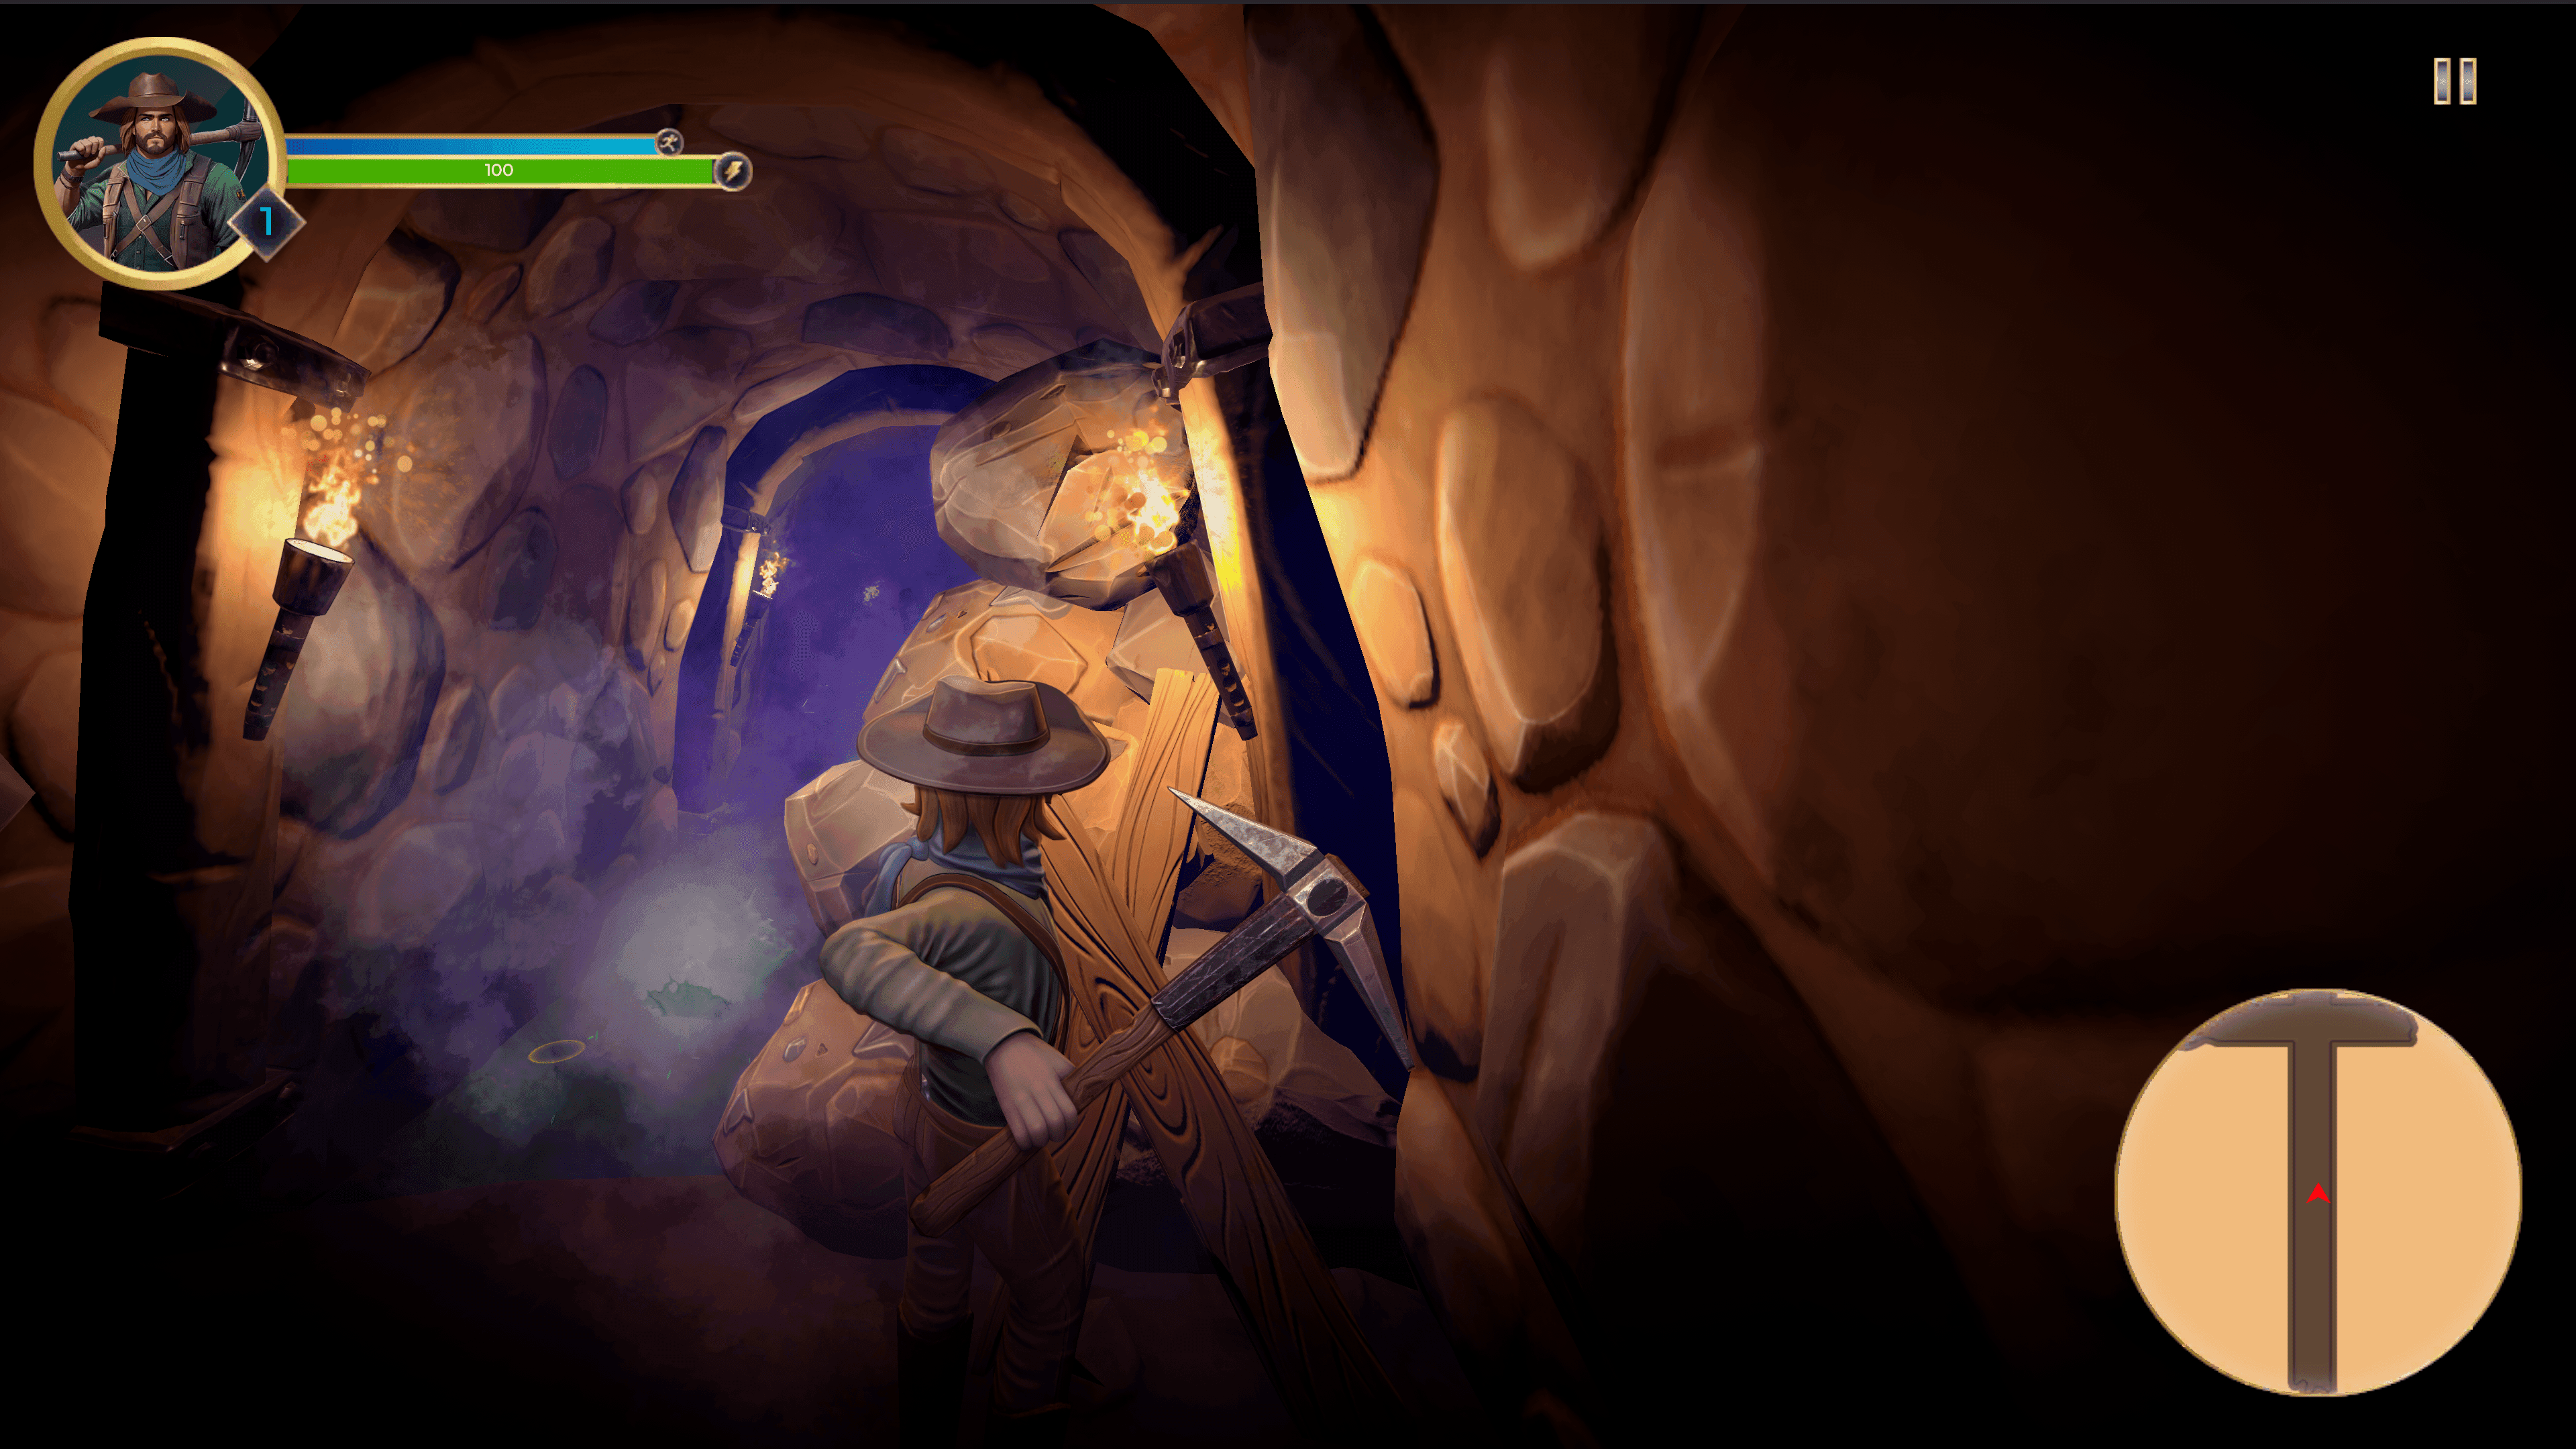 Miner Escape: Puzzle Adventure screenshot game